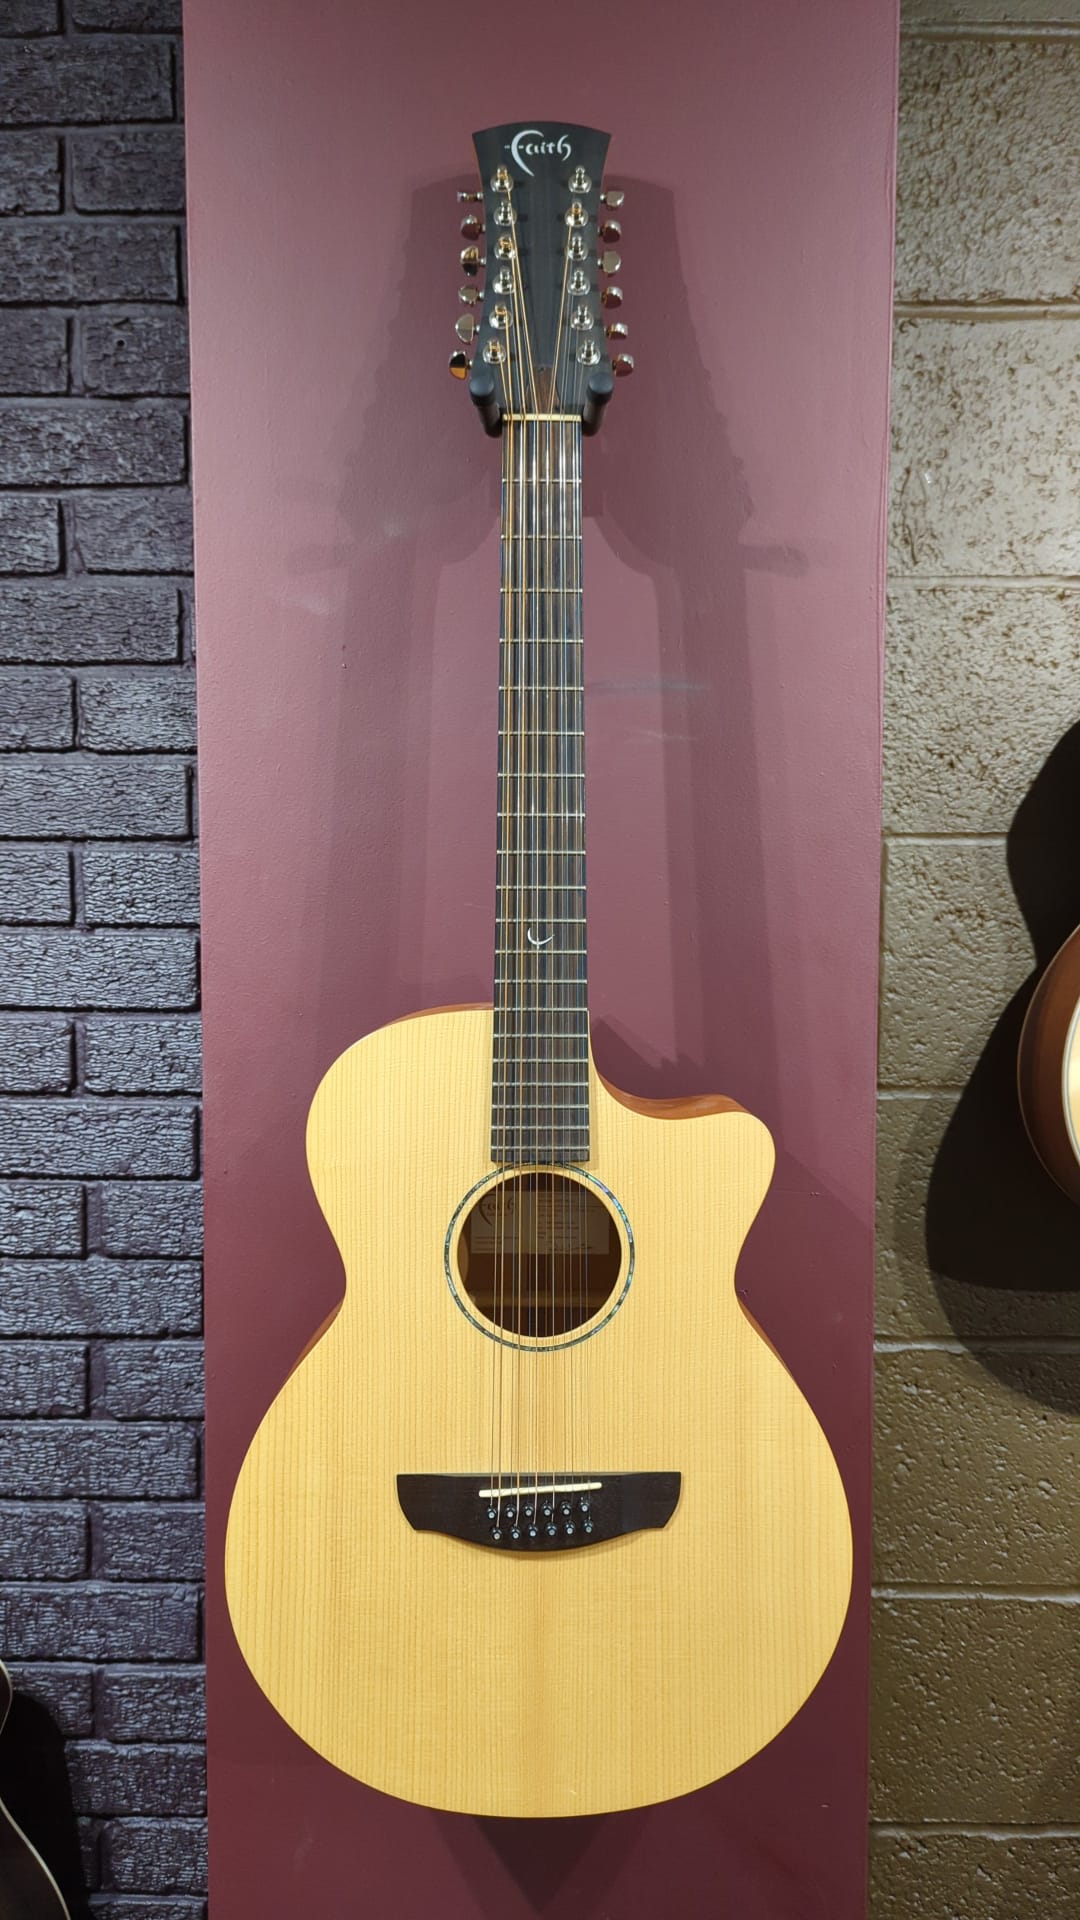 Faith FKV12 (used), Acoustic Guitar for sale at Richards Guitars.